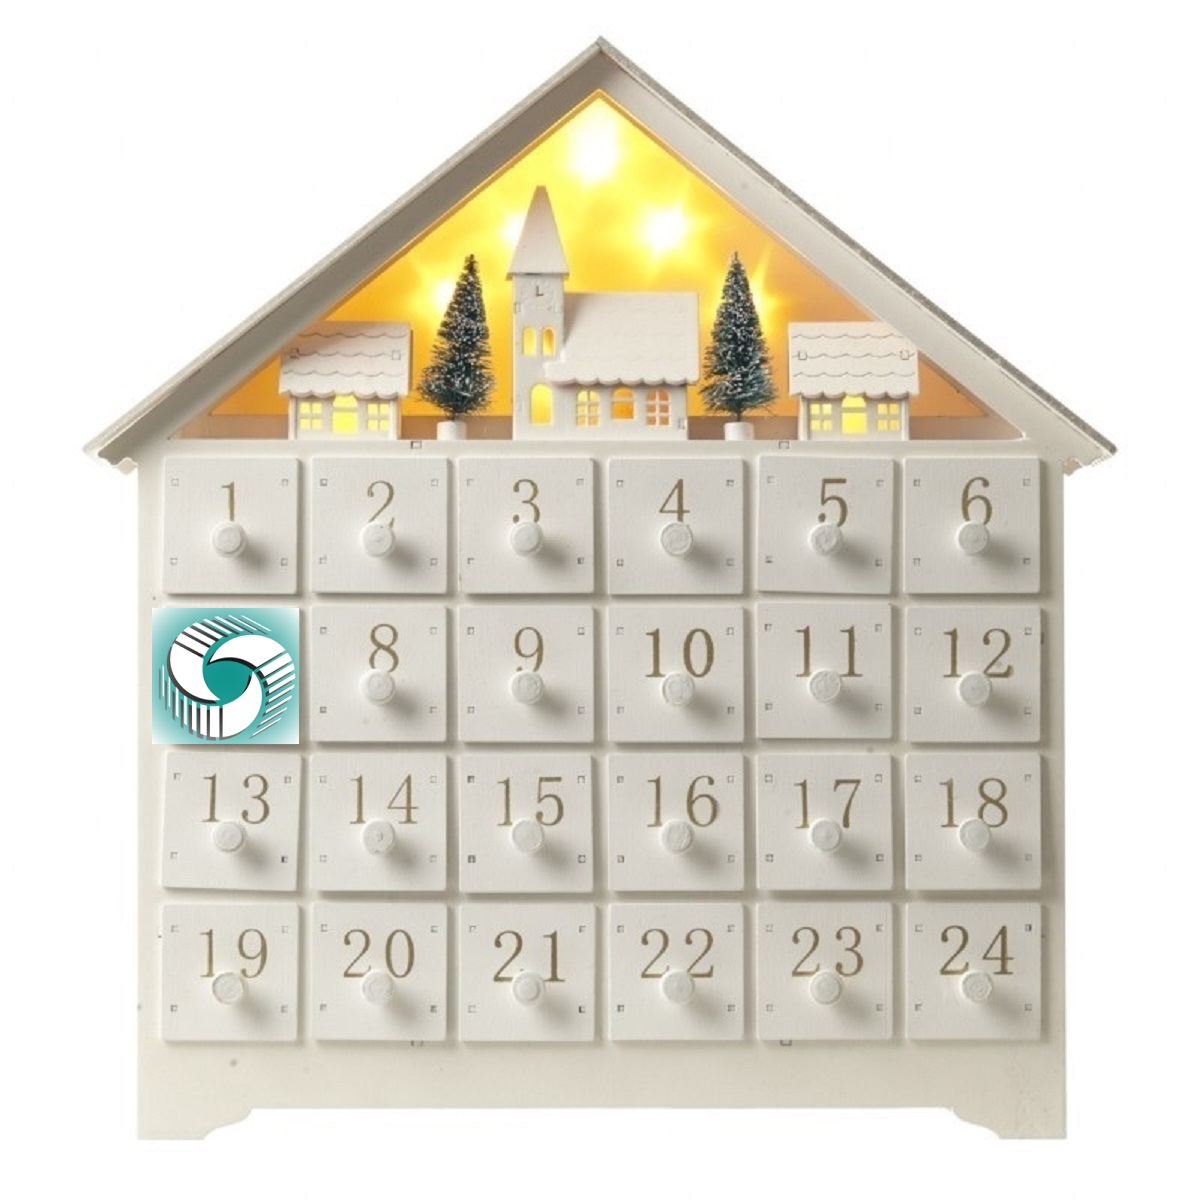 Day 7 – Frontier’s Advent Calendar